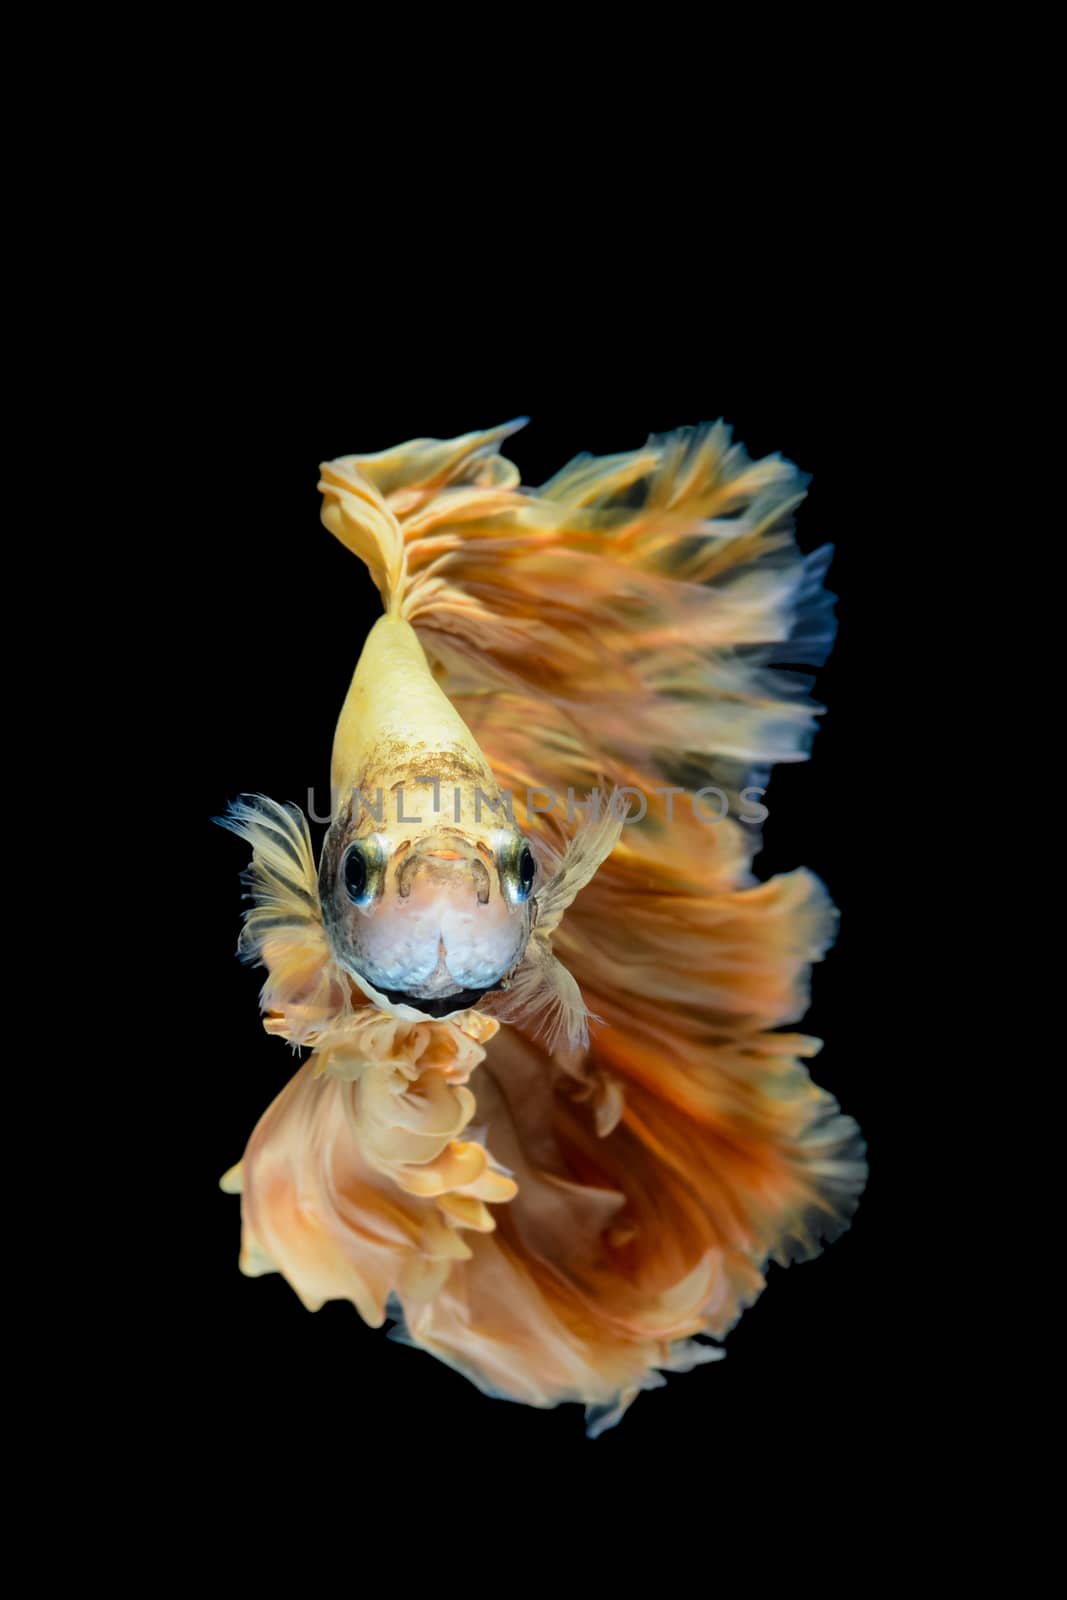 Yellow gold betta fish, siamese fighting fish on black backgroun by yuiyuize